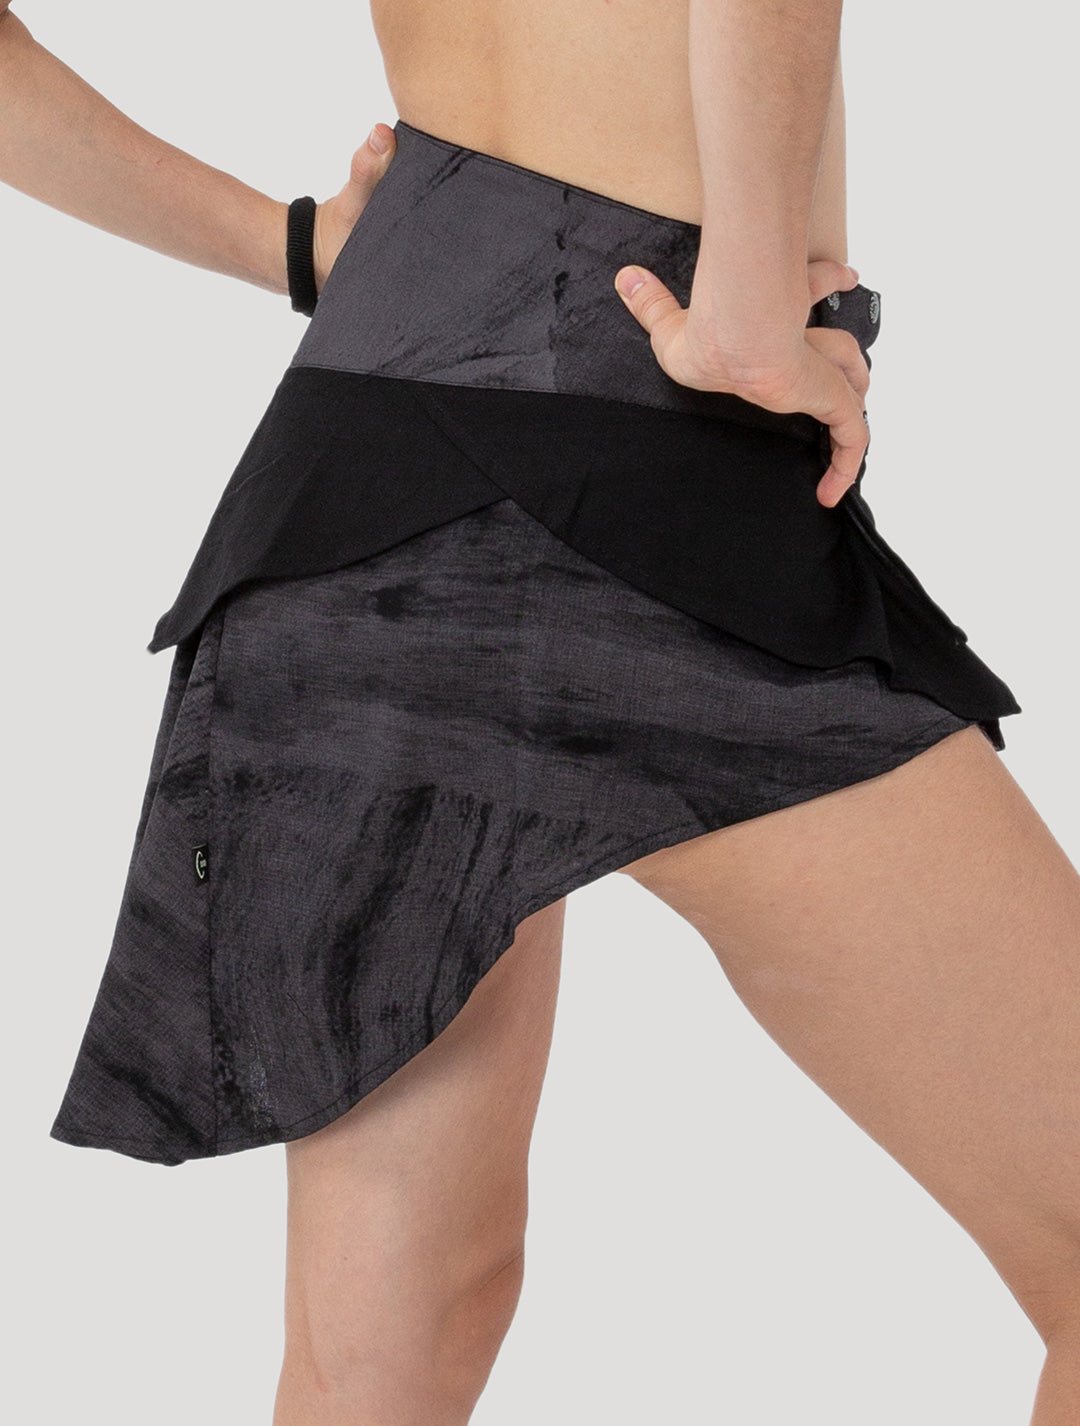 Chic Wraparound Skirt - Psylo Fashion